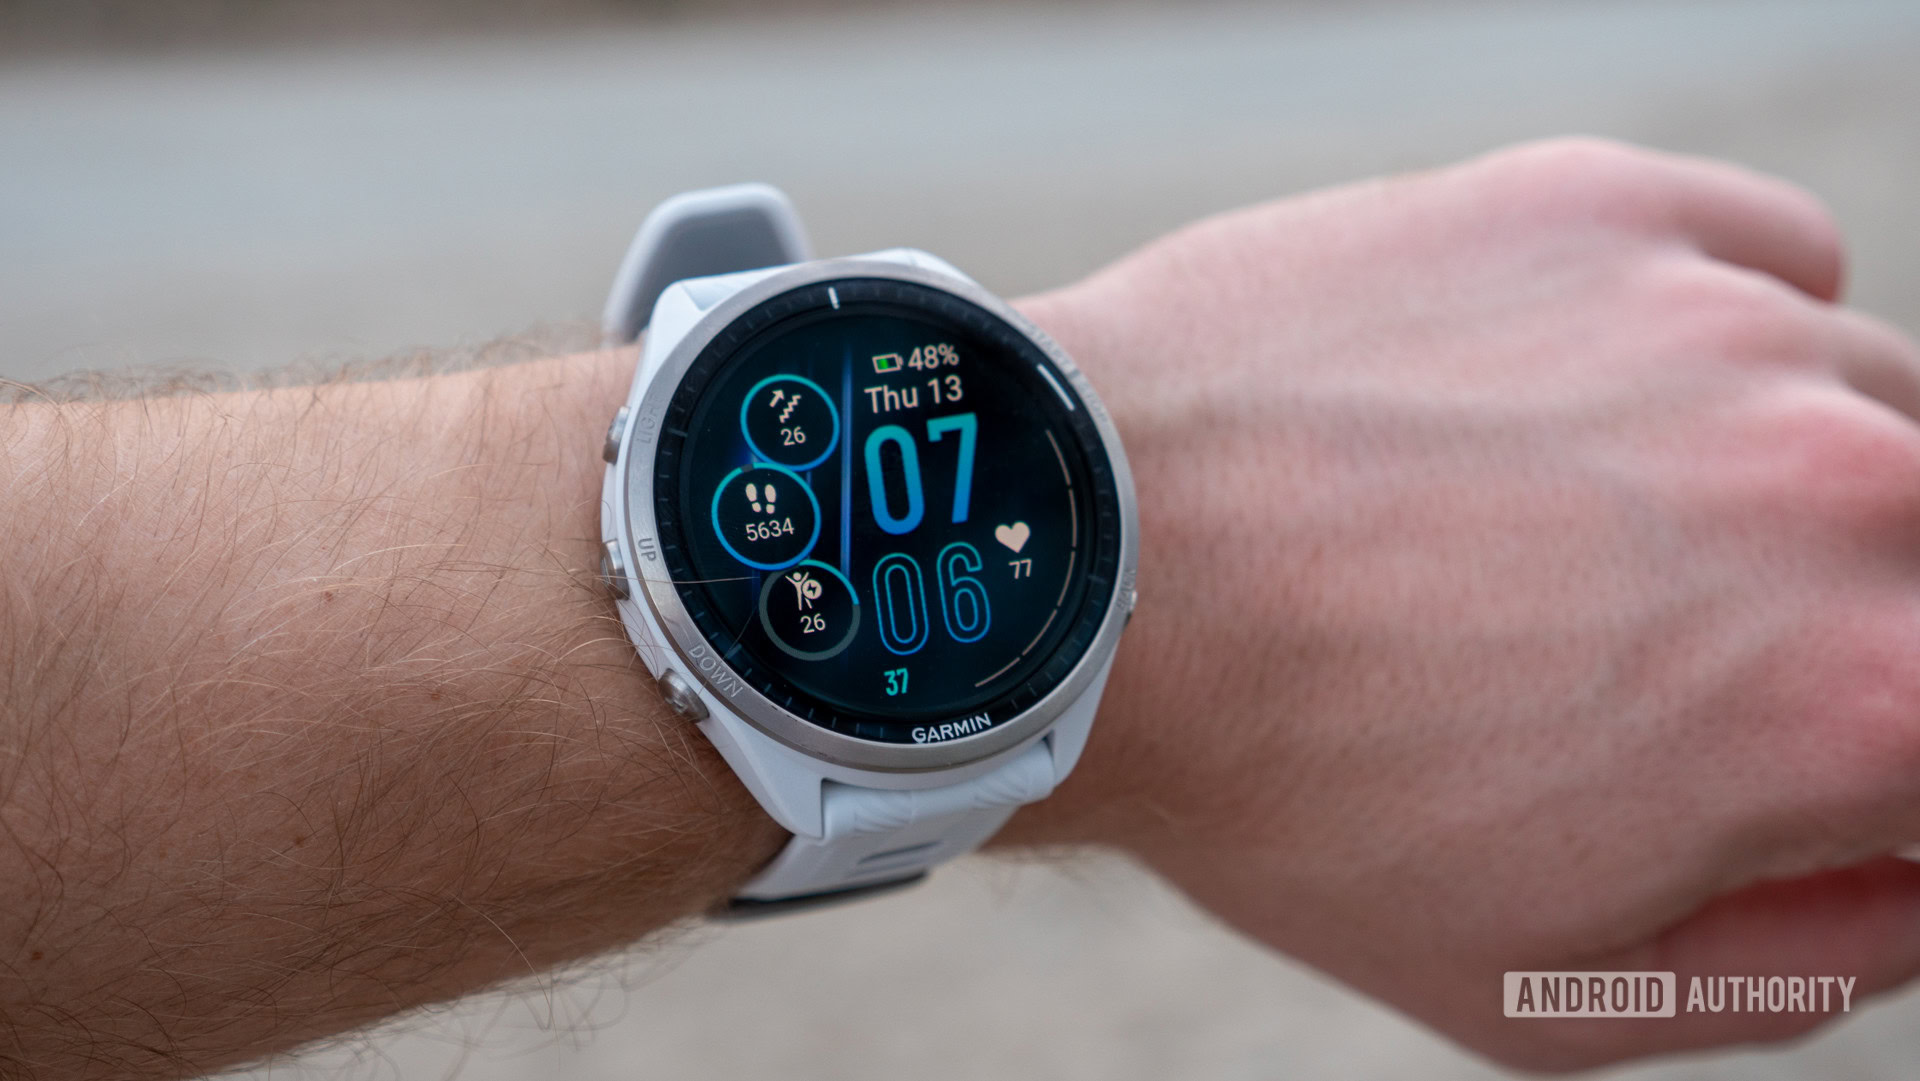 Garmin announces Forerunner 55, an easy-to-use running smartwatch.